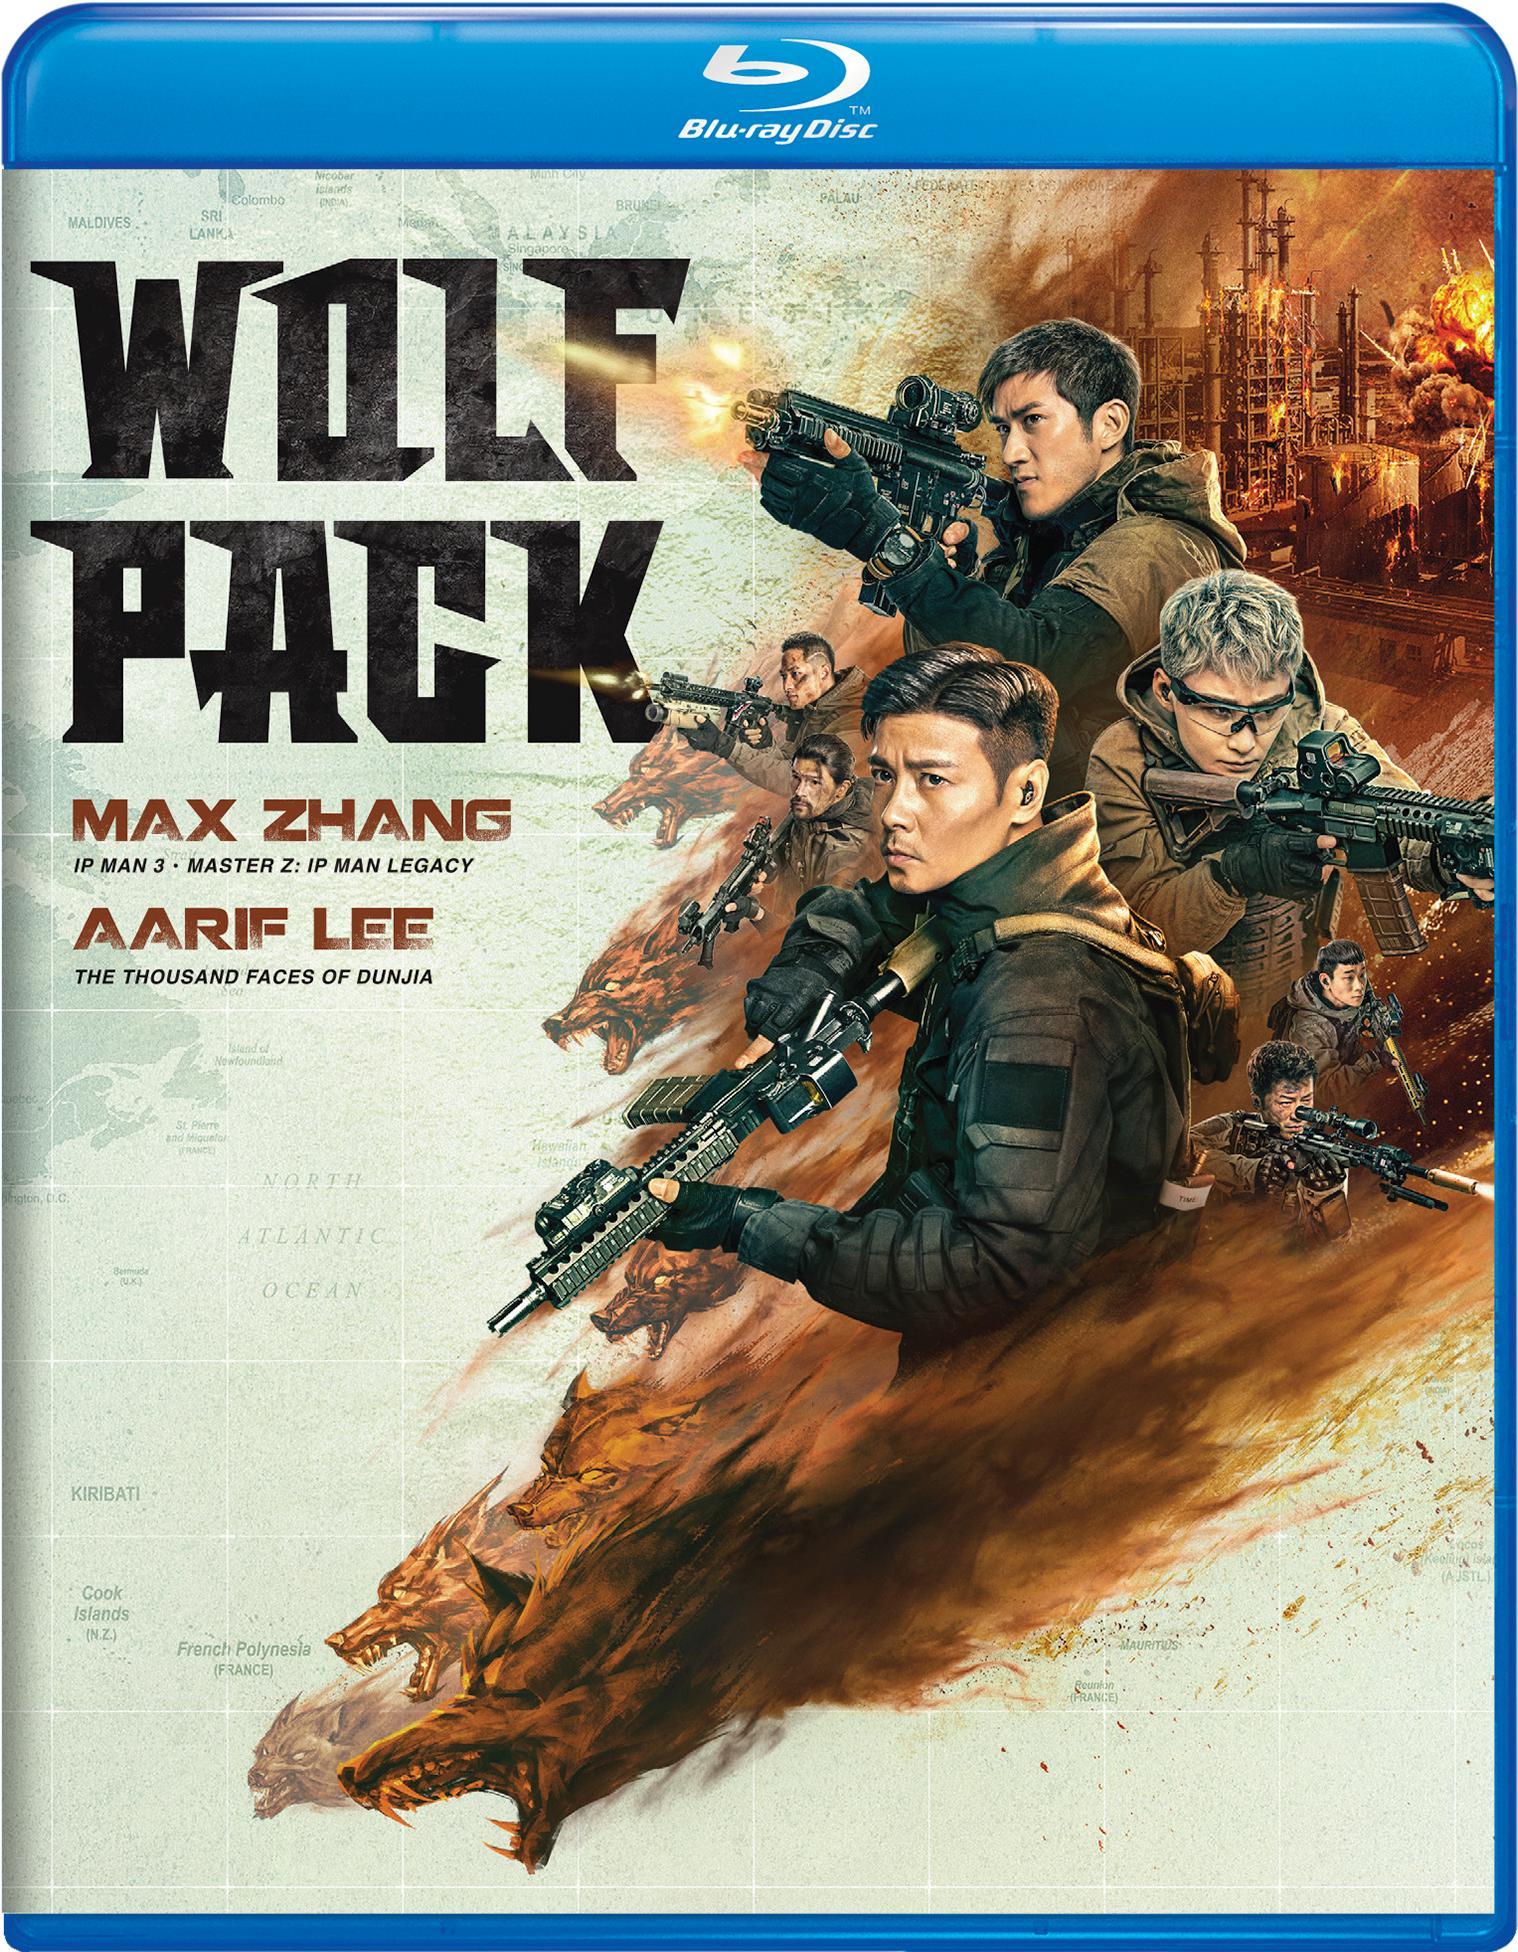 Wolf Pack - Blu-ray